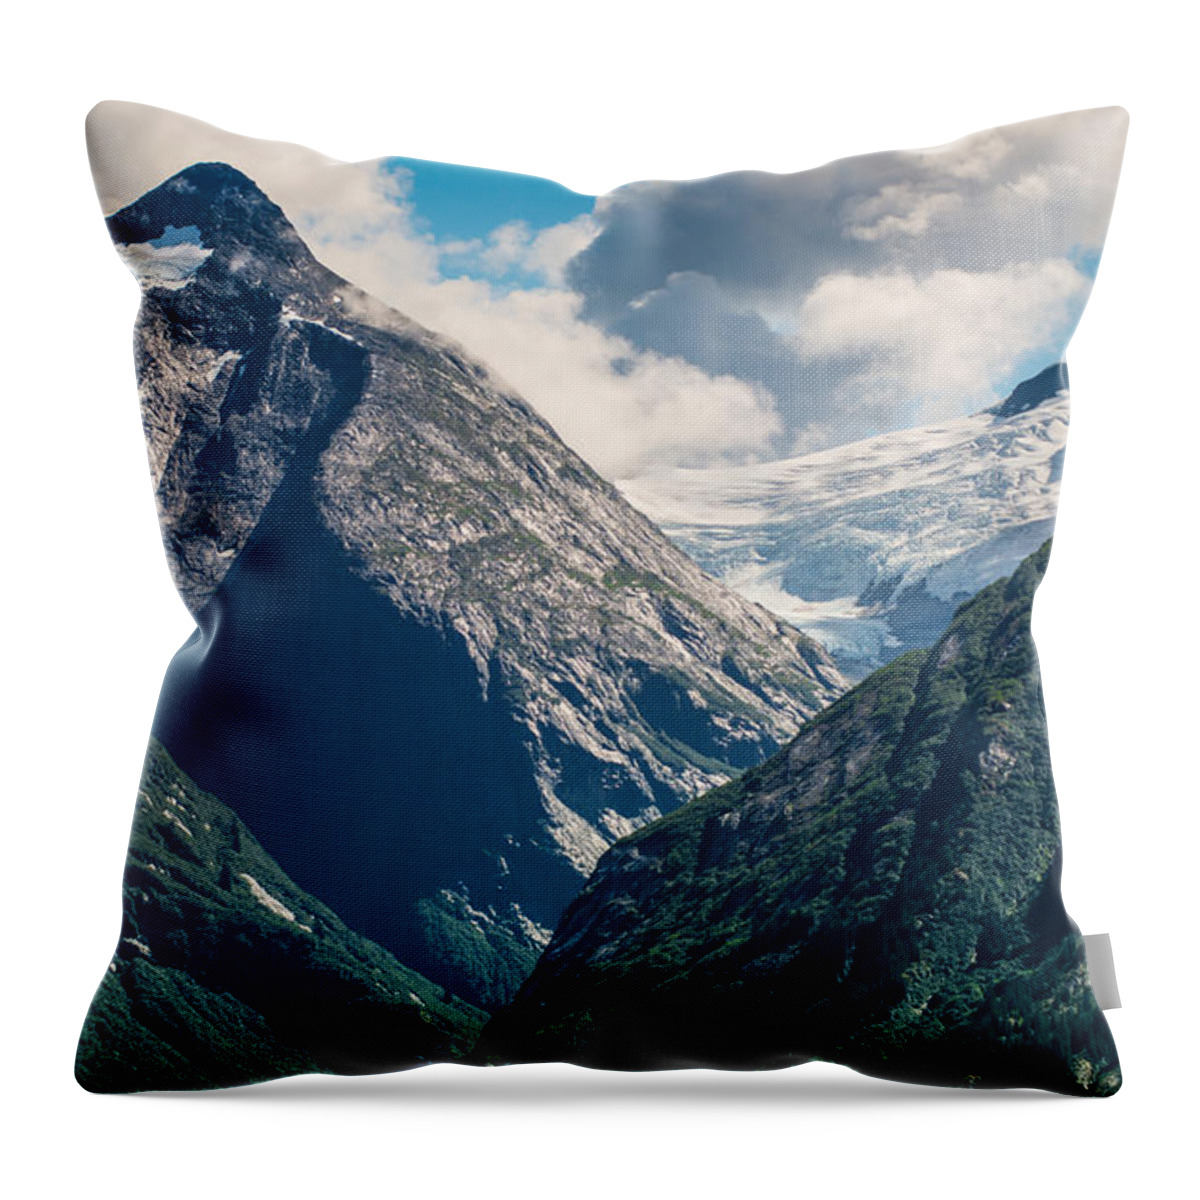 Alaska Throw Pillow featuring the photograph Mountain Peaks by Steve Seeger